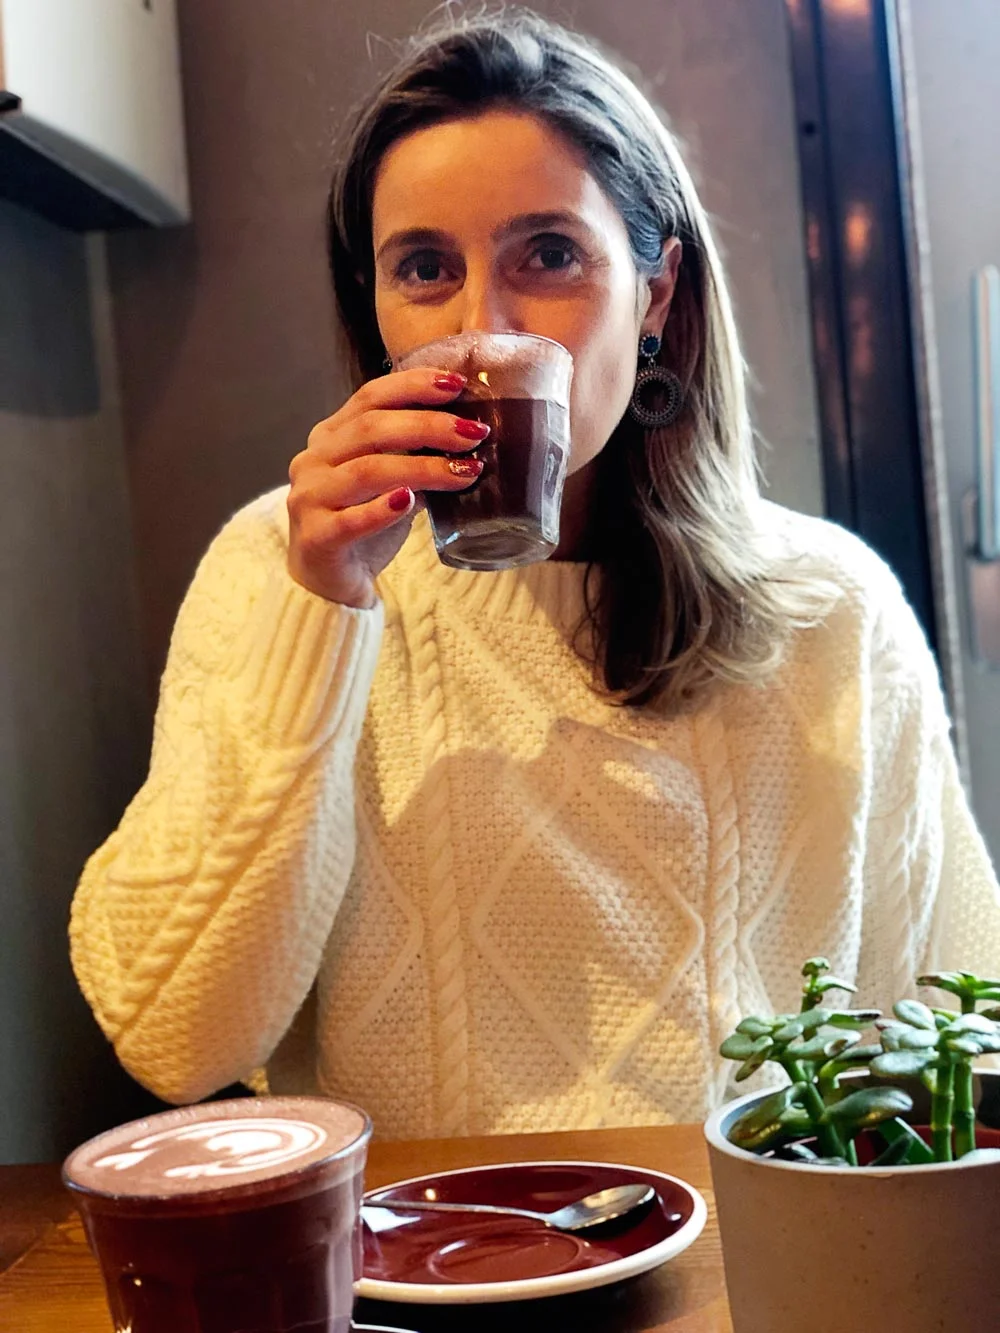 Sara drinking hot chocolate at Zenith, in Porto.